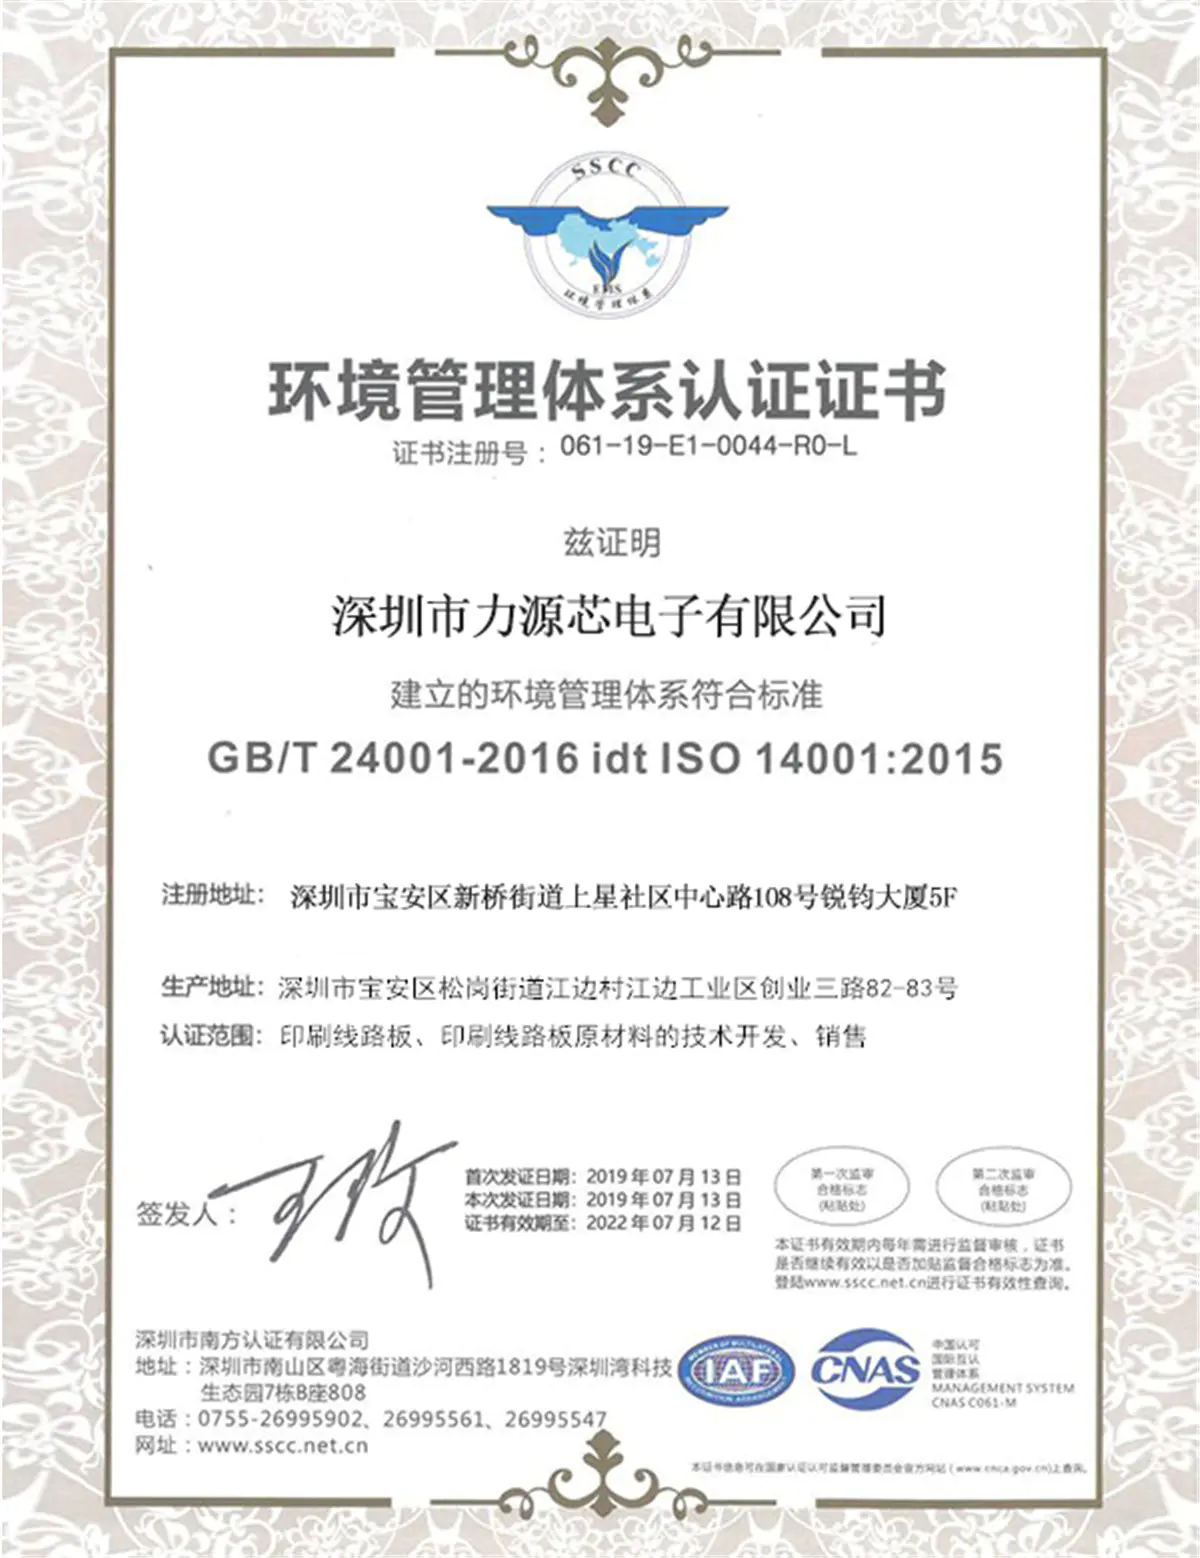 ISO14001 인증 획득